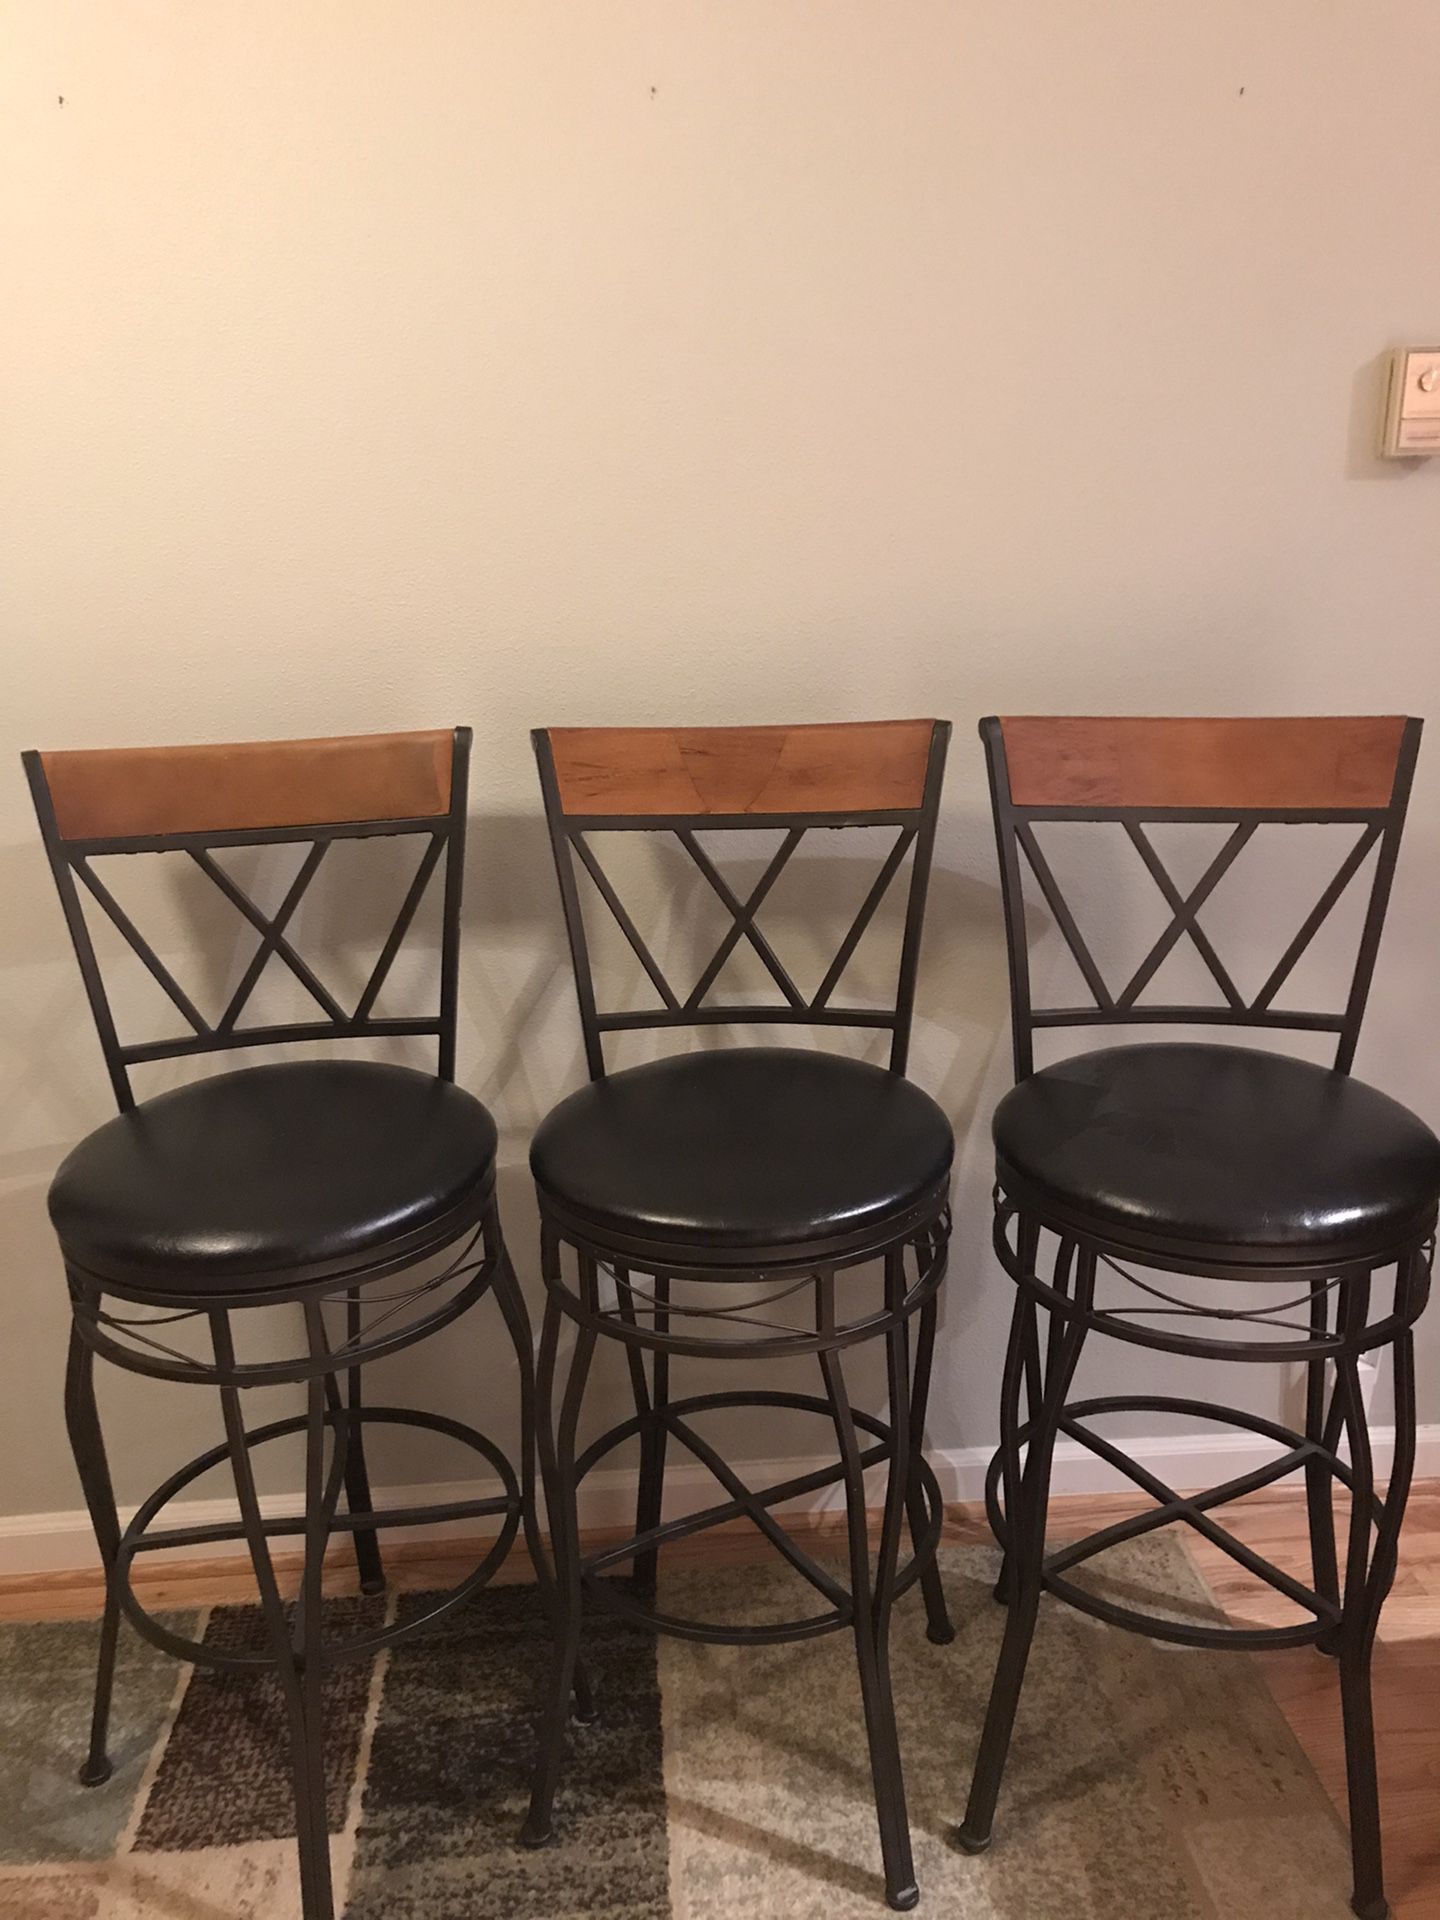 3 Bar Chairs seat 23”. $50.